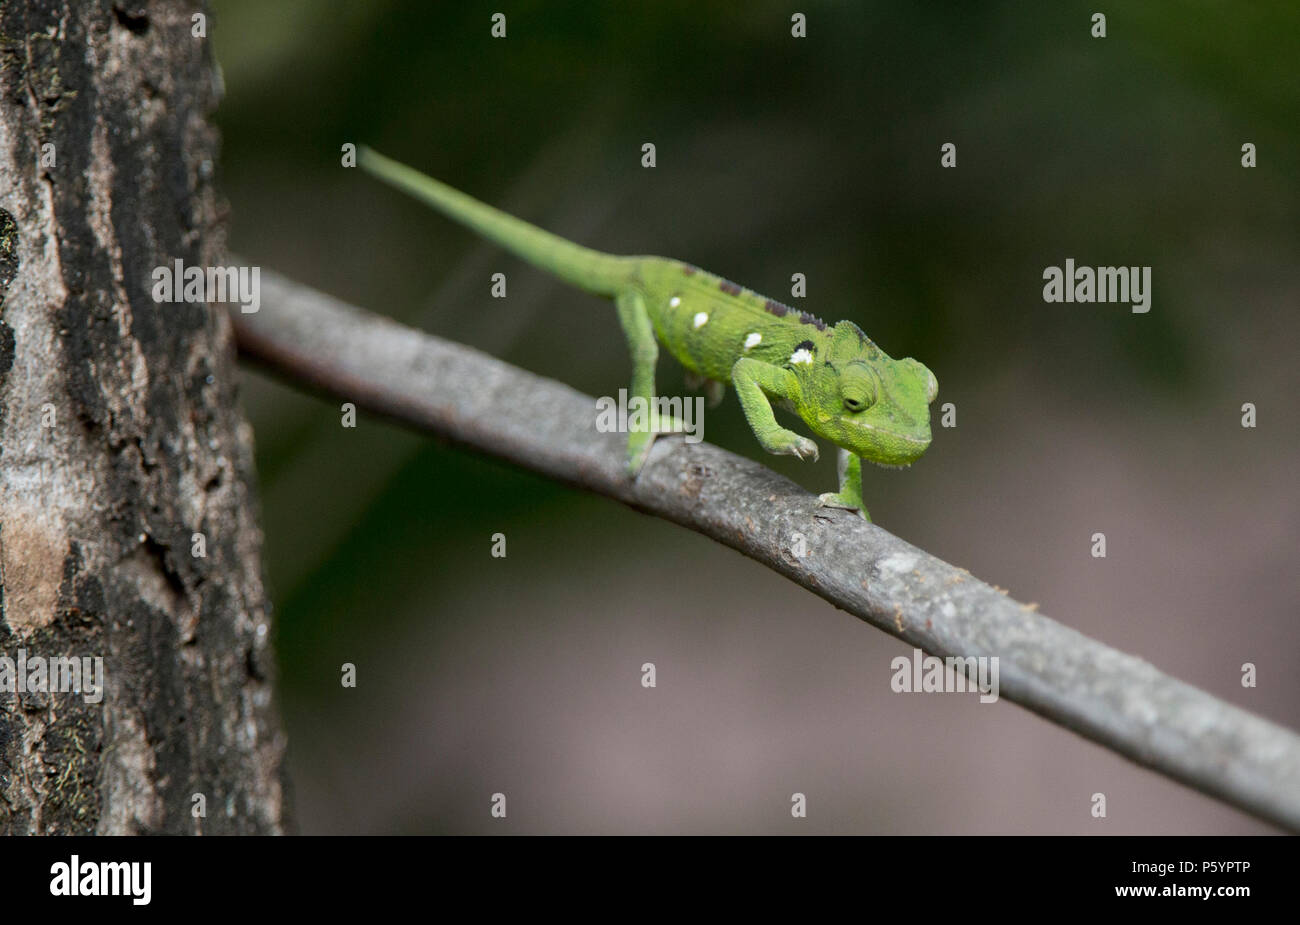 Madagascan chameleon Stock Photo